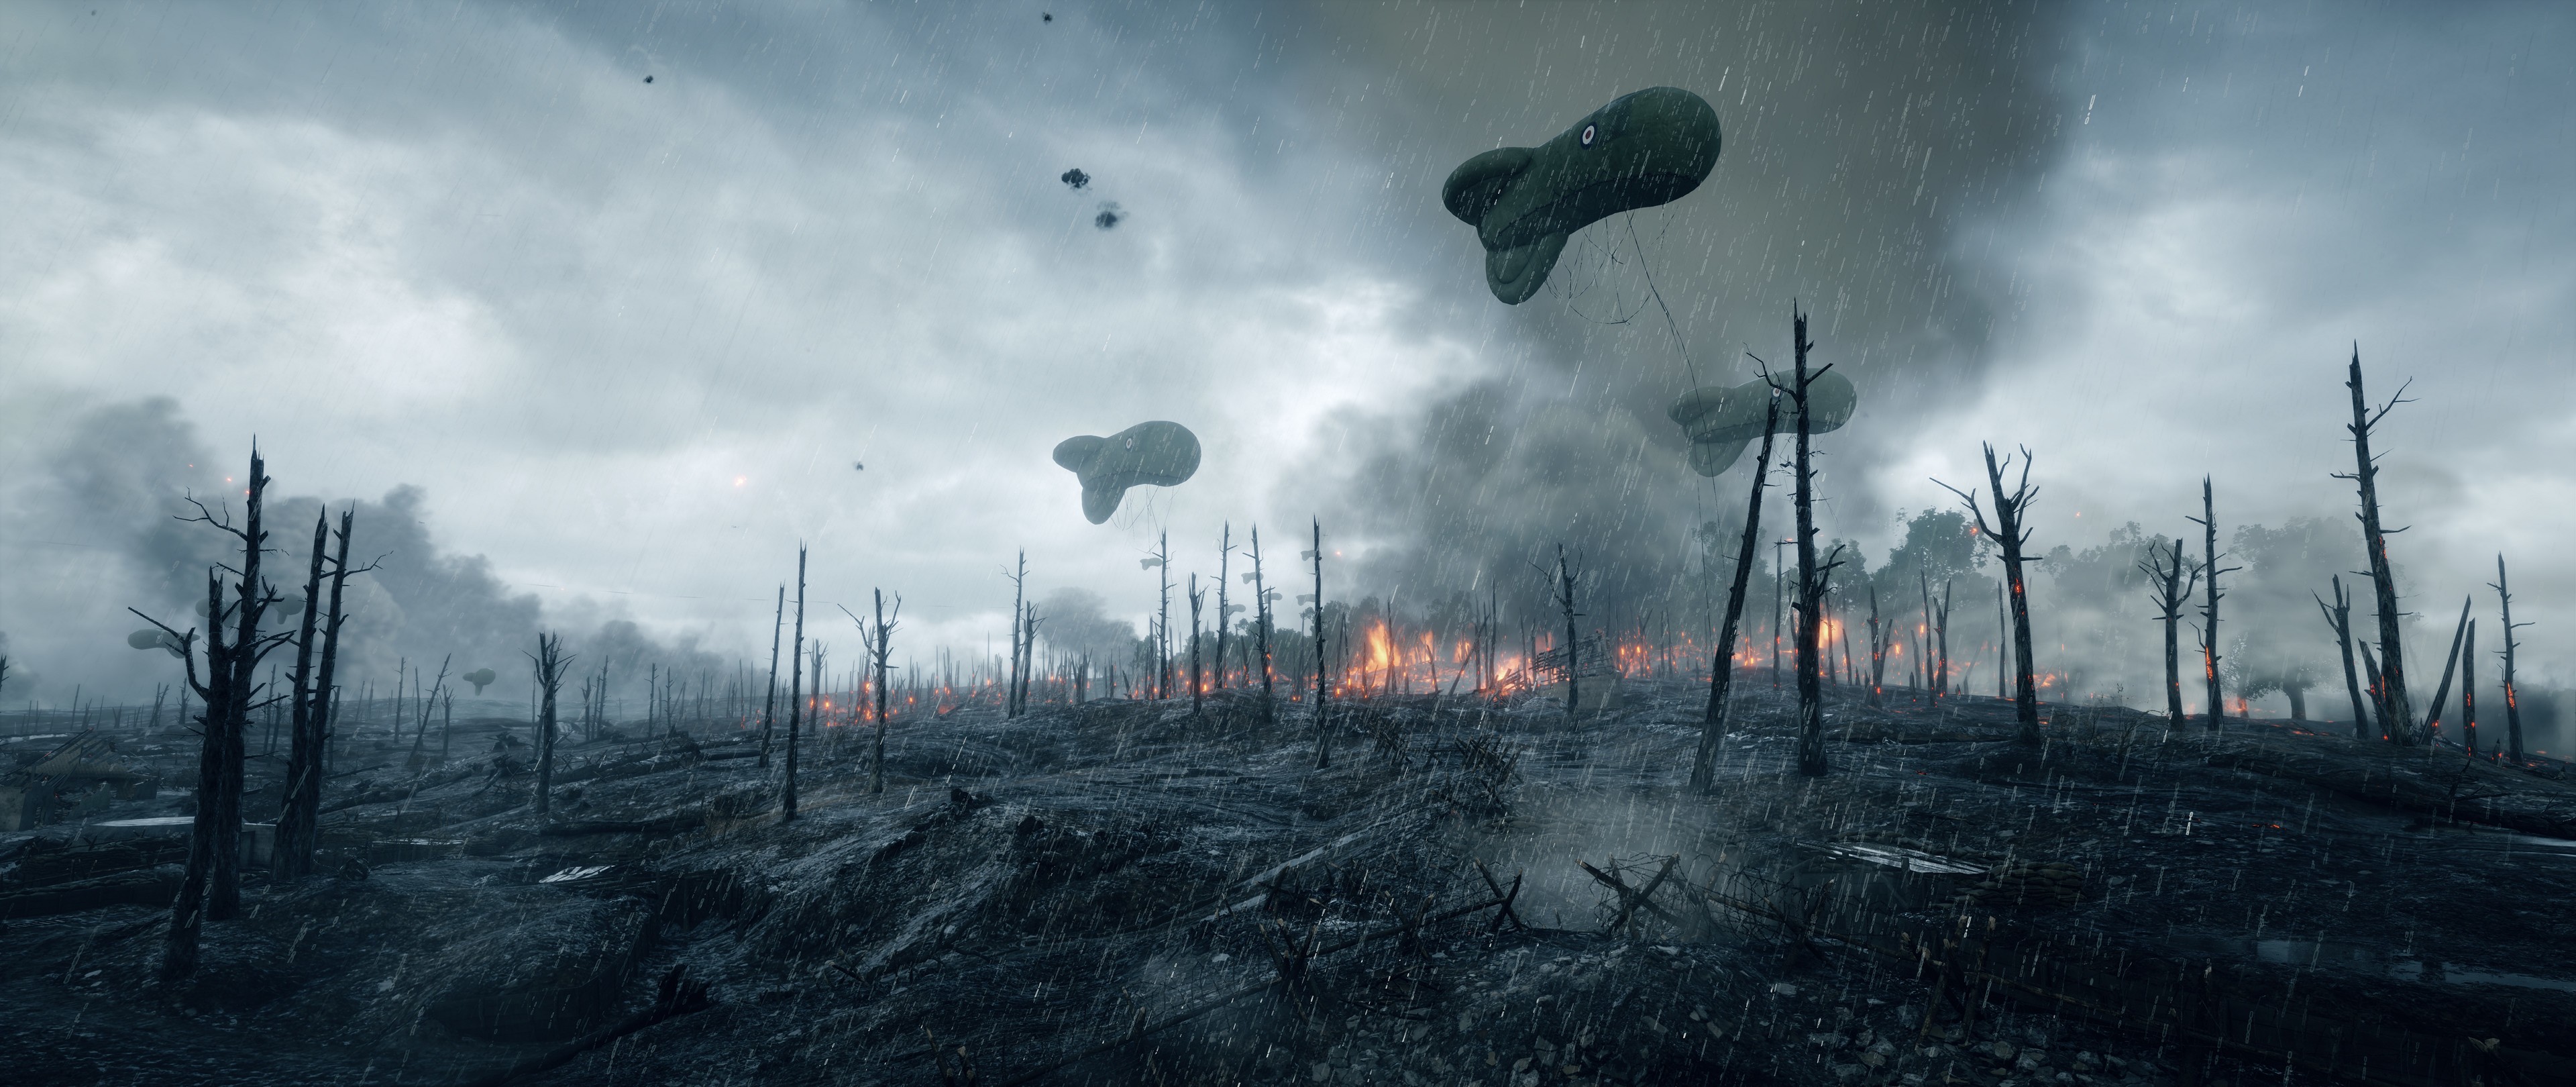 Battlefield 1 EA DiCE World War I Soldier War Video Games 3840x1620